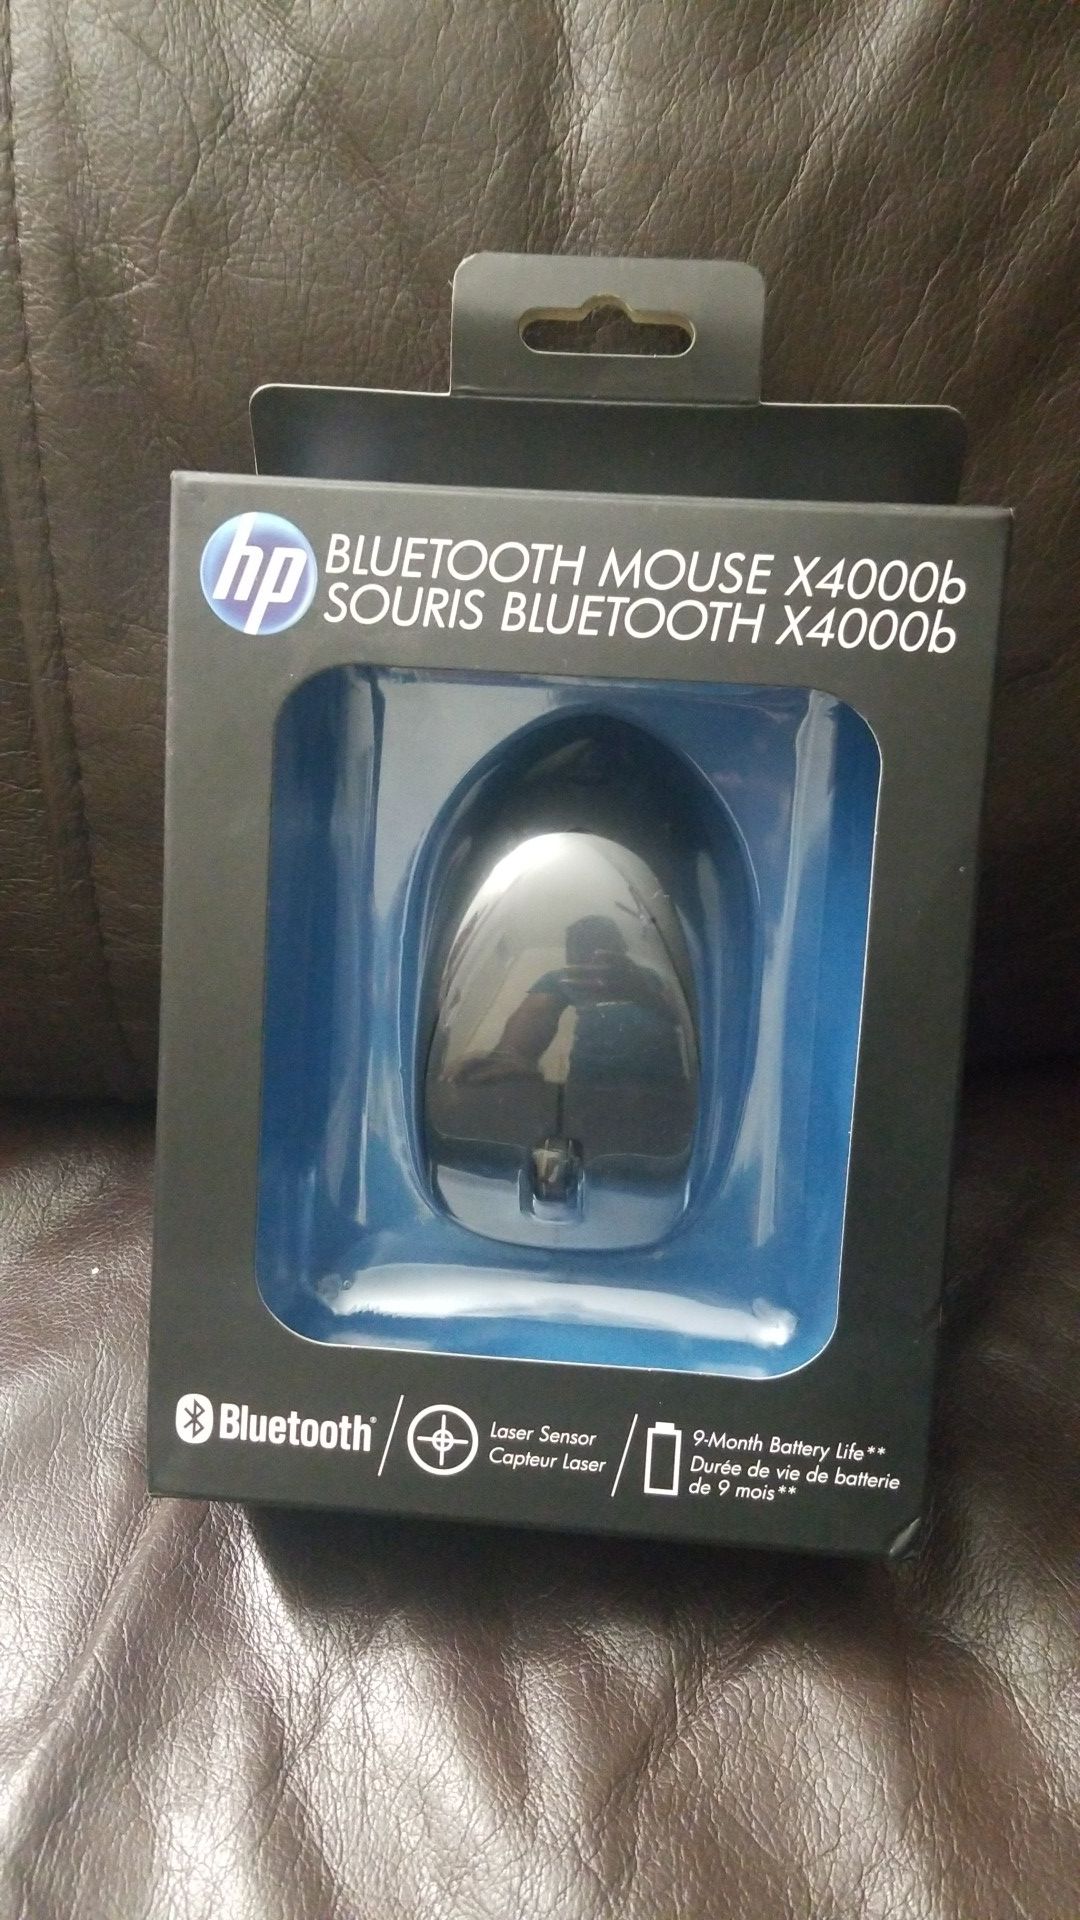 HP bluetooth mouse x4000b